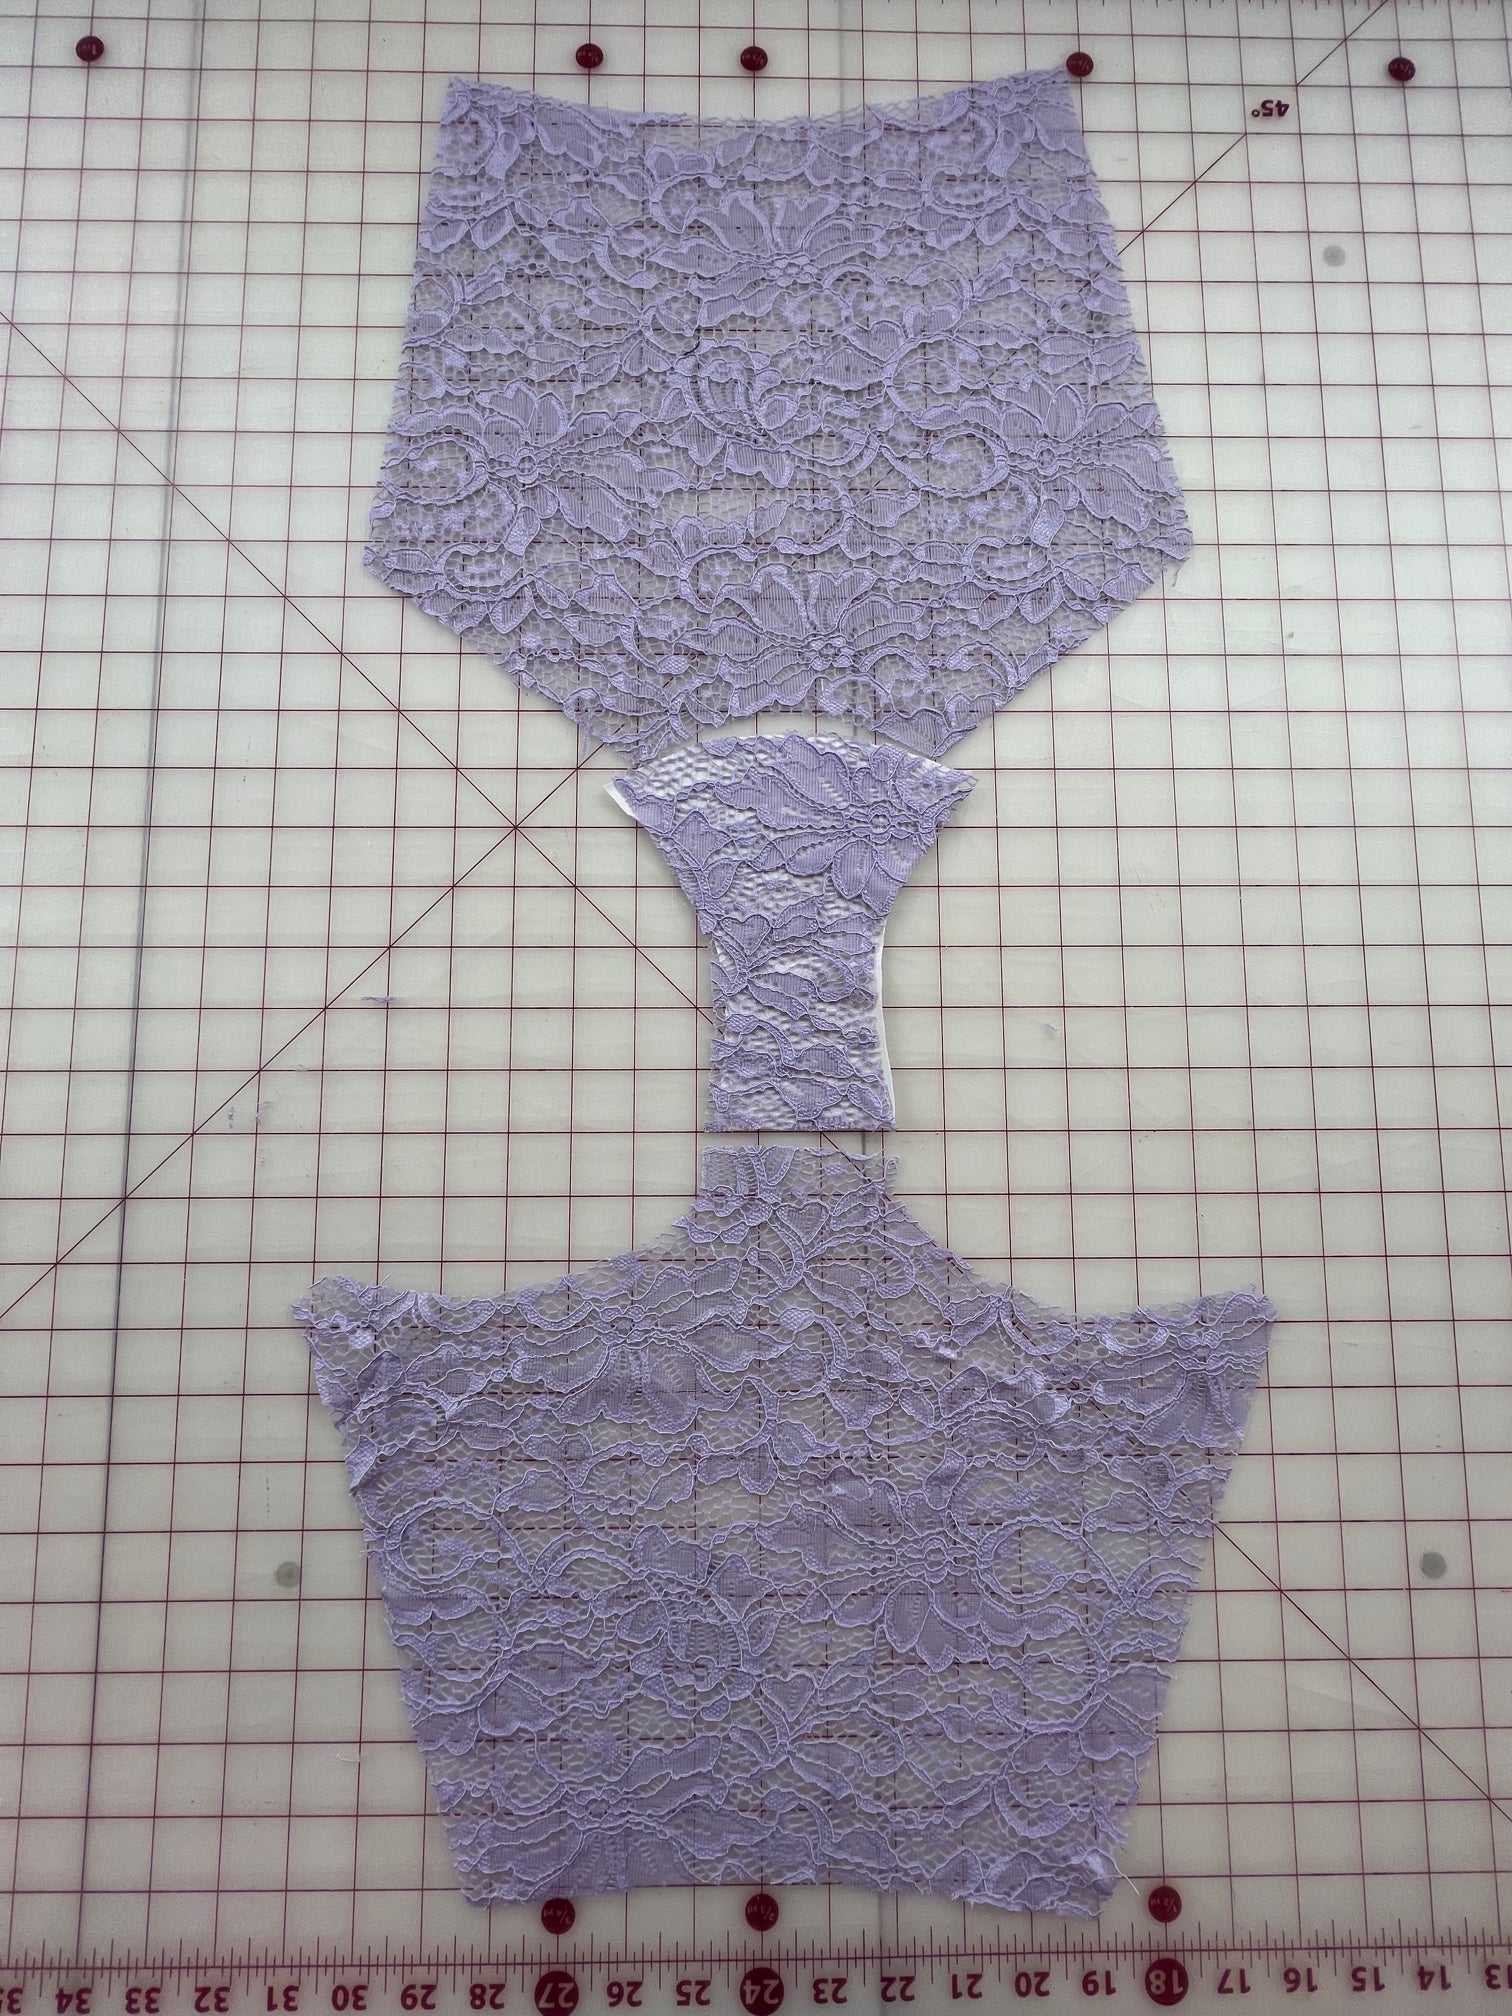 Simple High Waisted Panties PDF Sewing Pattern – Sew Anastasia